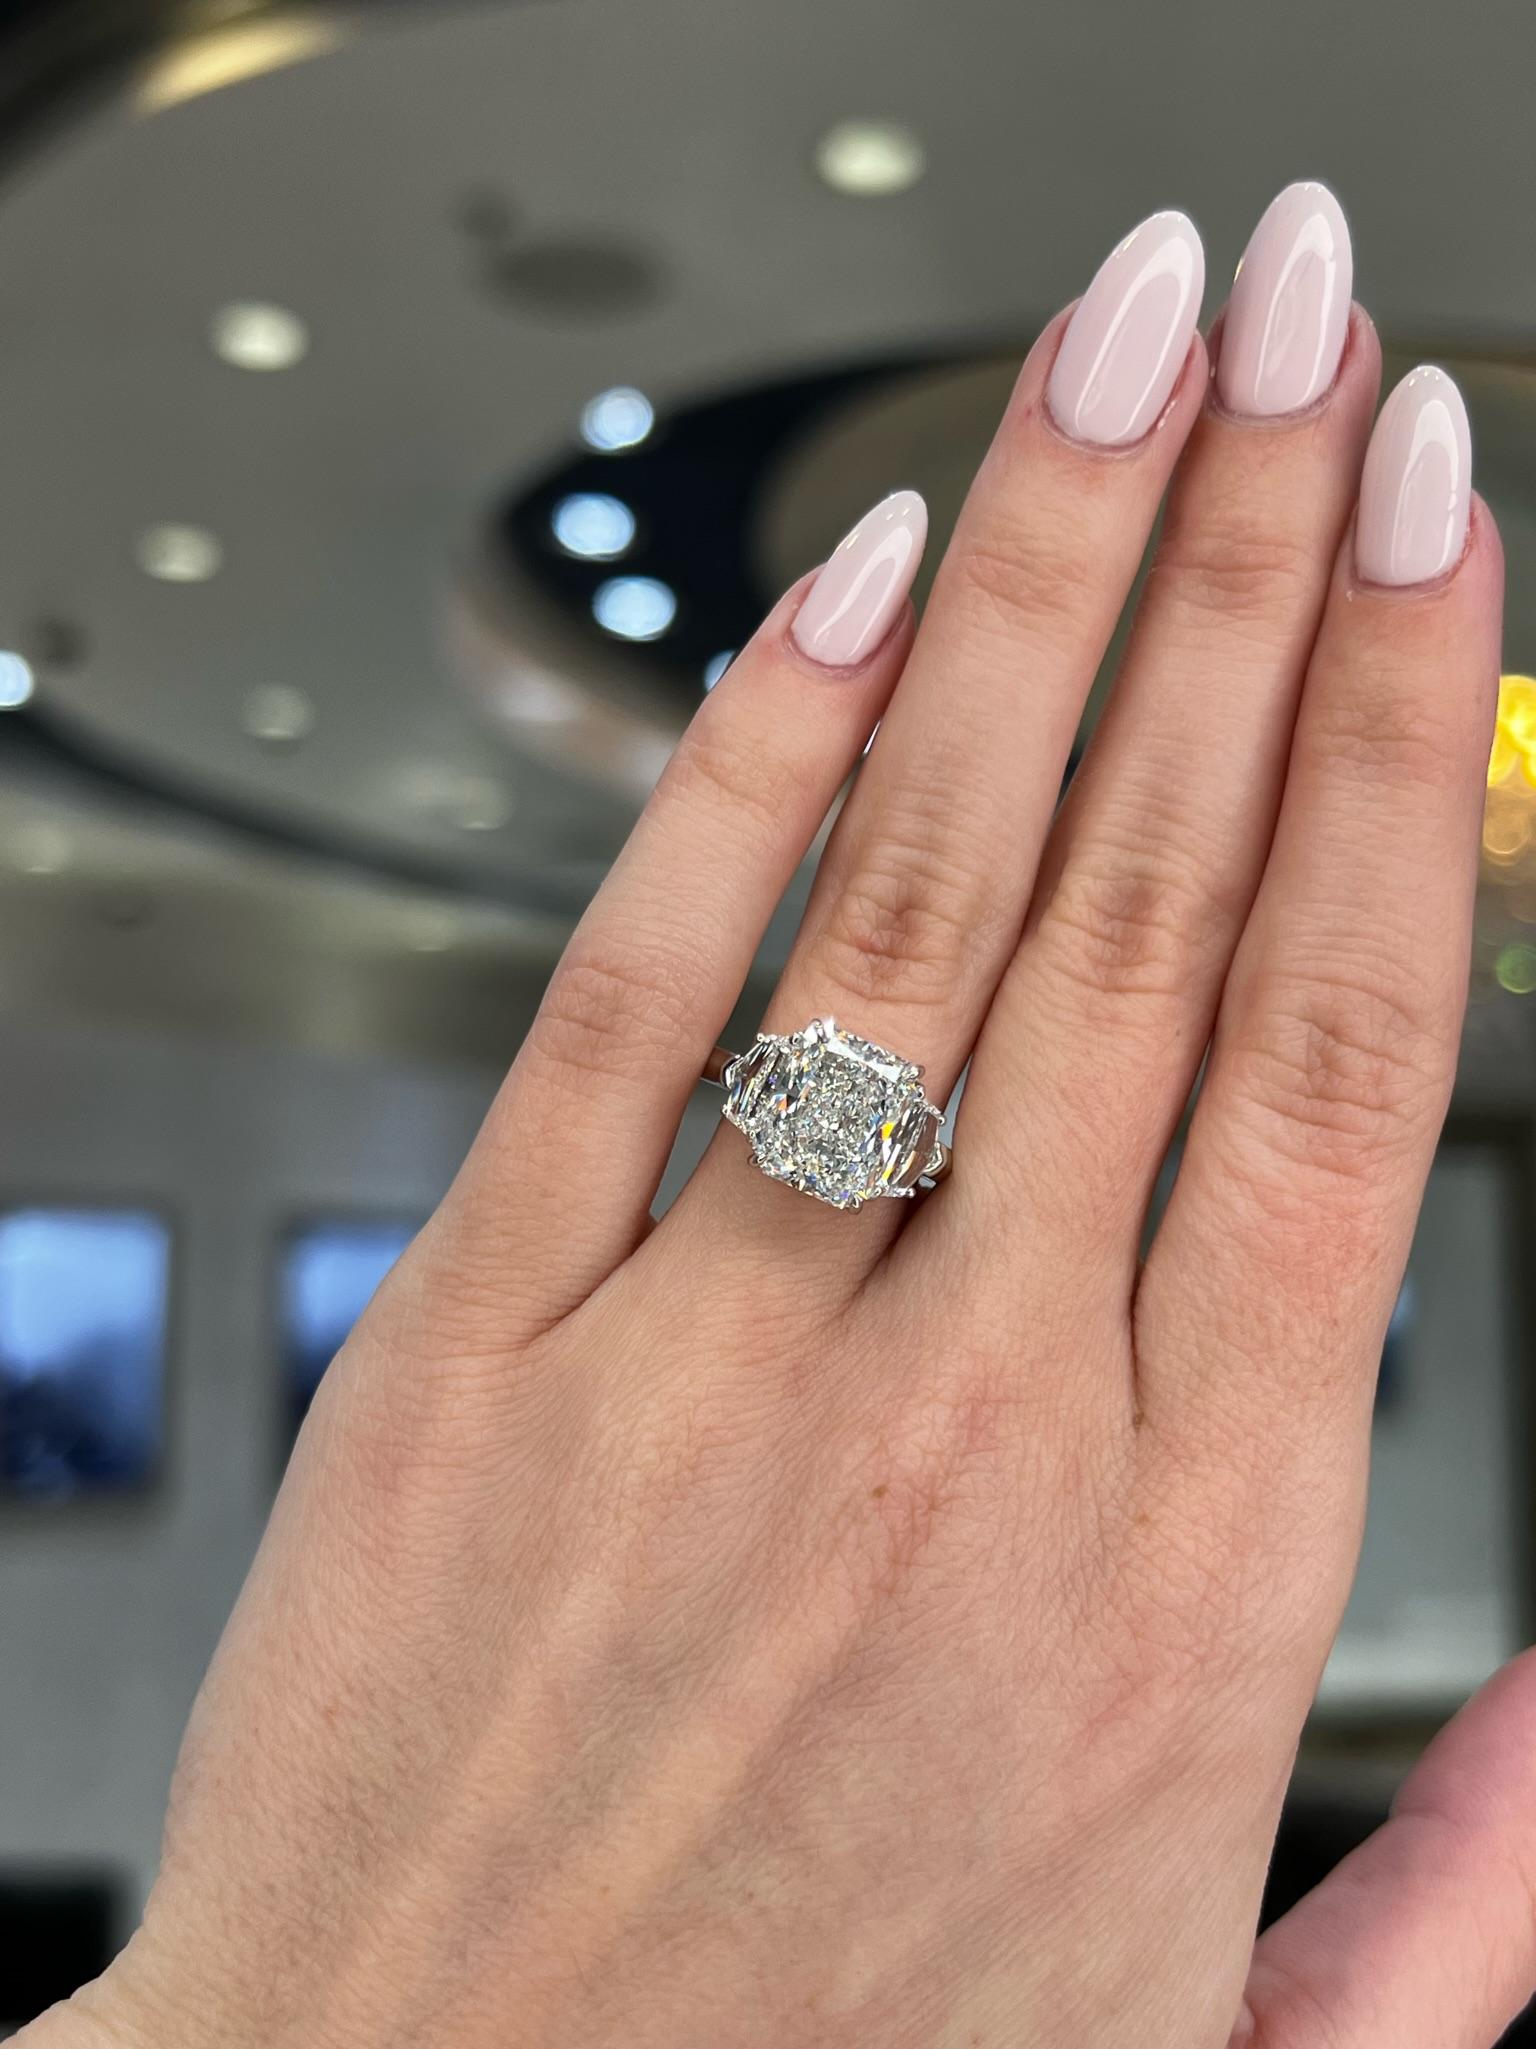 David Rosenberg 5.01 Carat Radiant Cut F SI1 GIA Diamond Engagement Ring For Sale 1